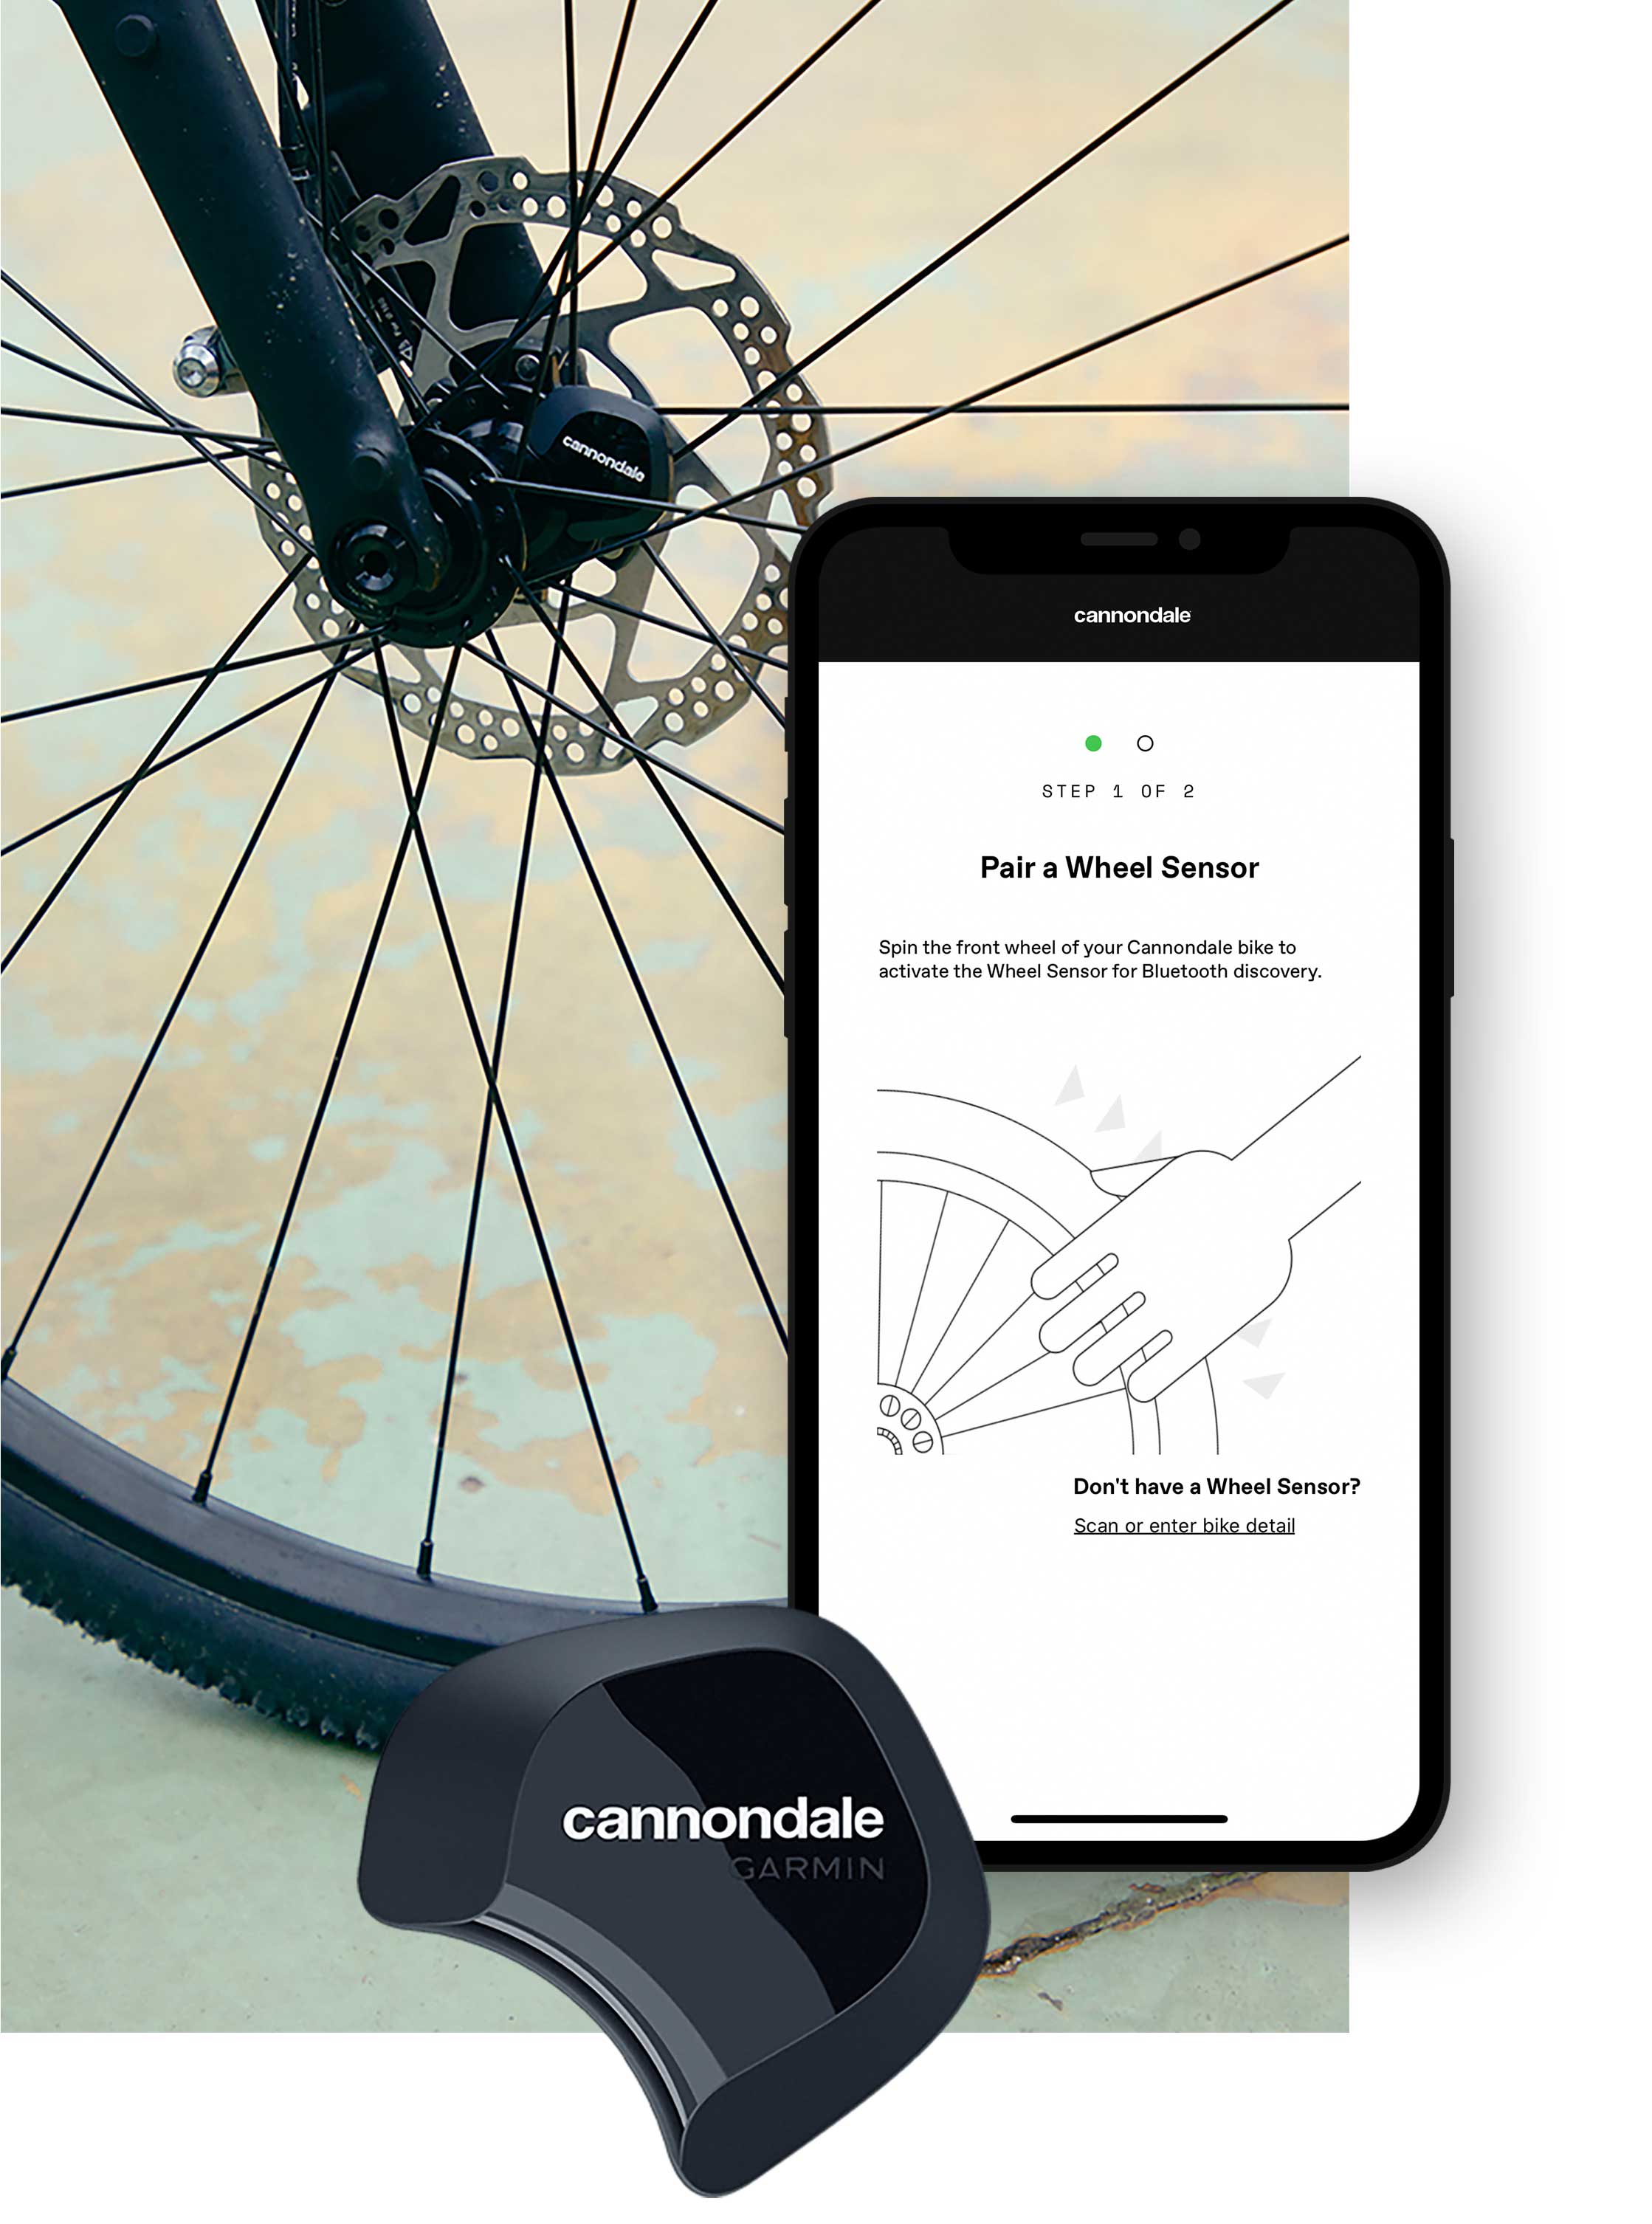 garmin cannondale wheel sensor